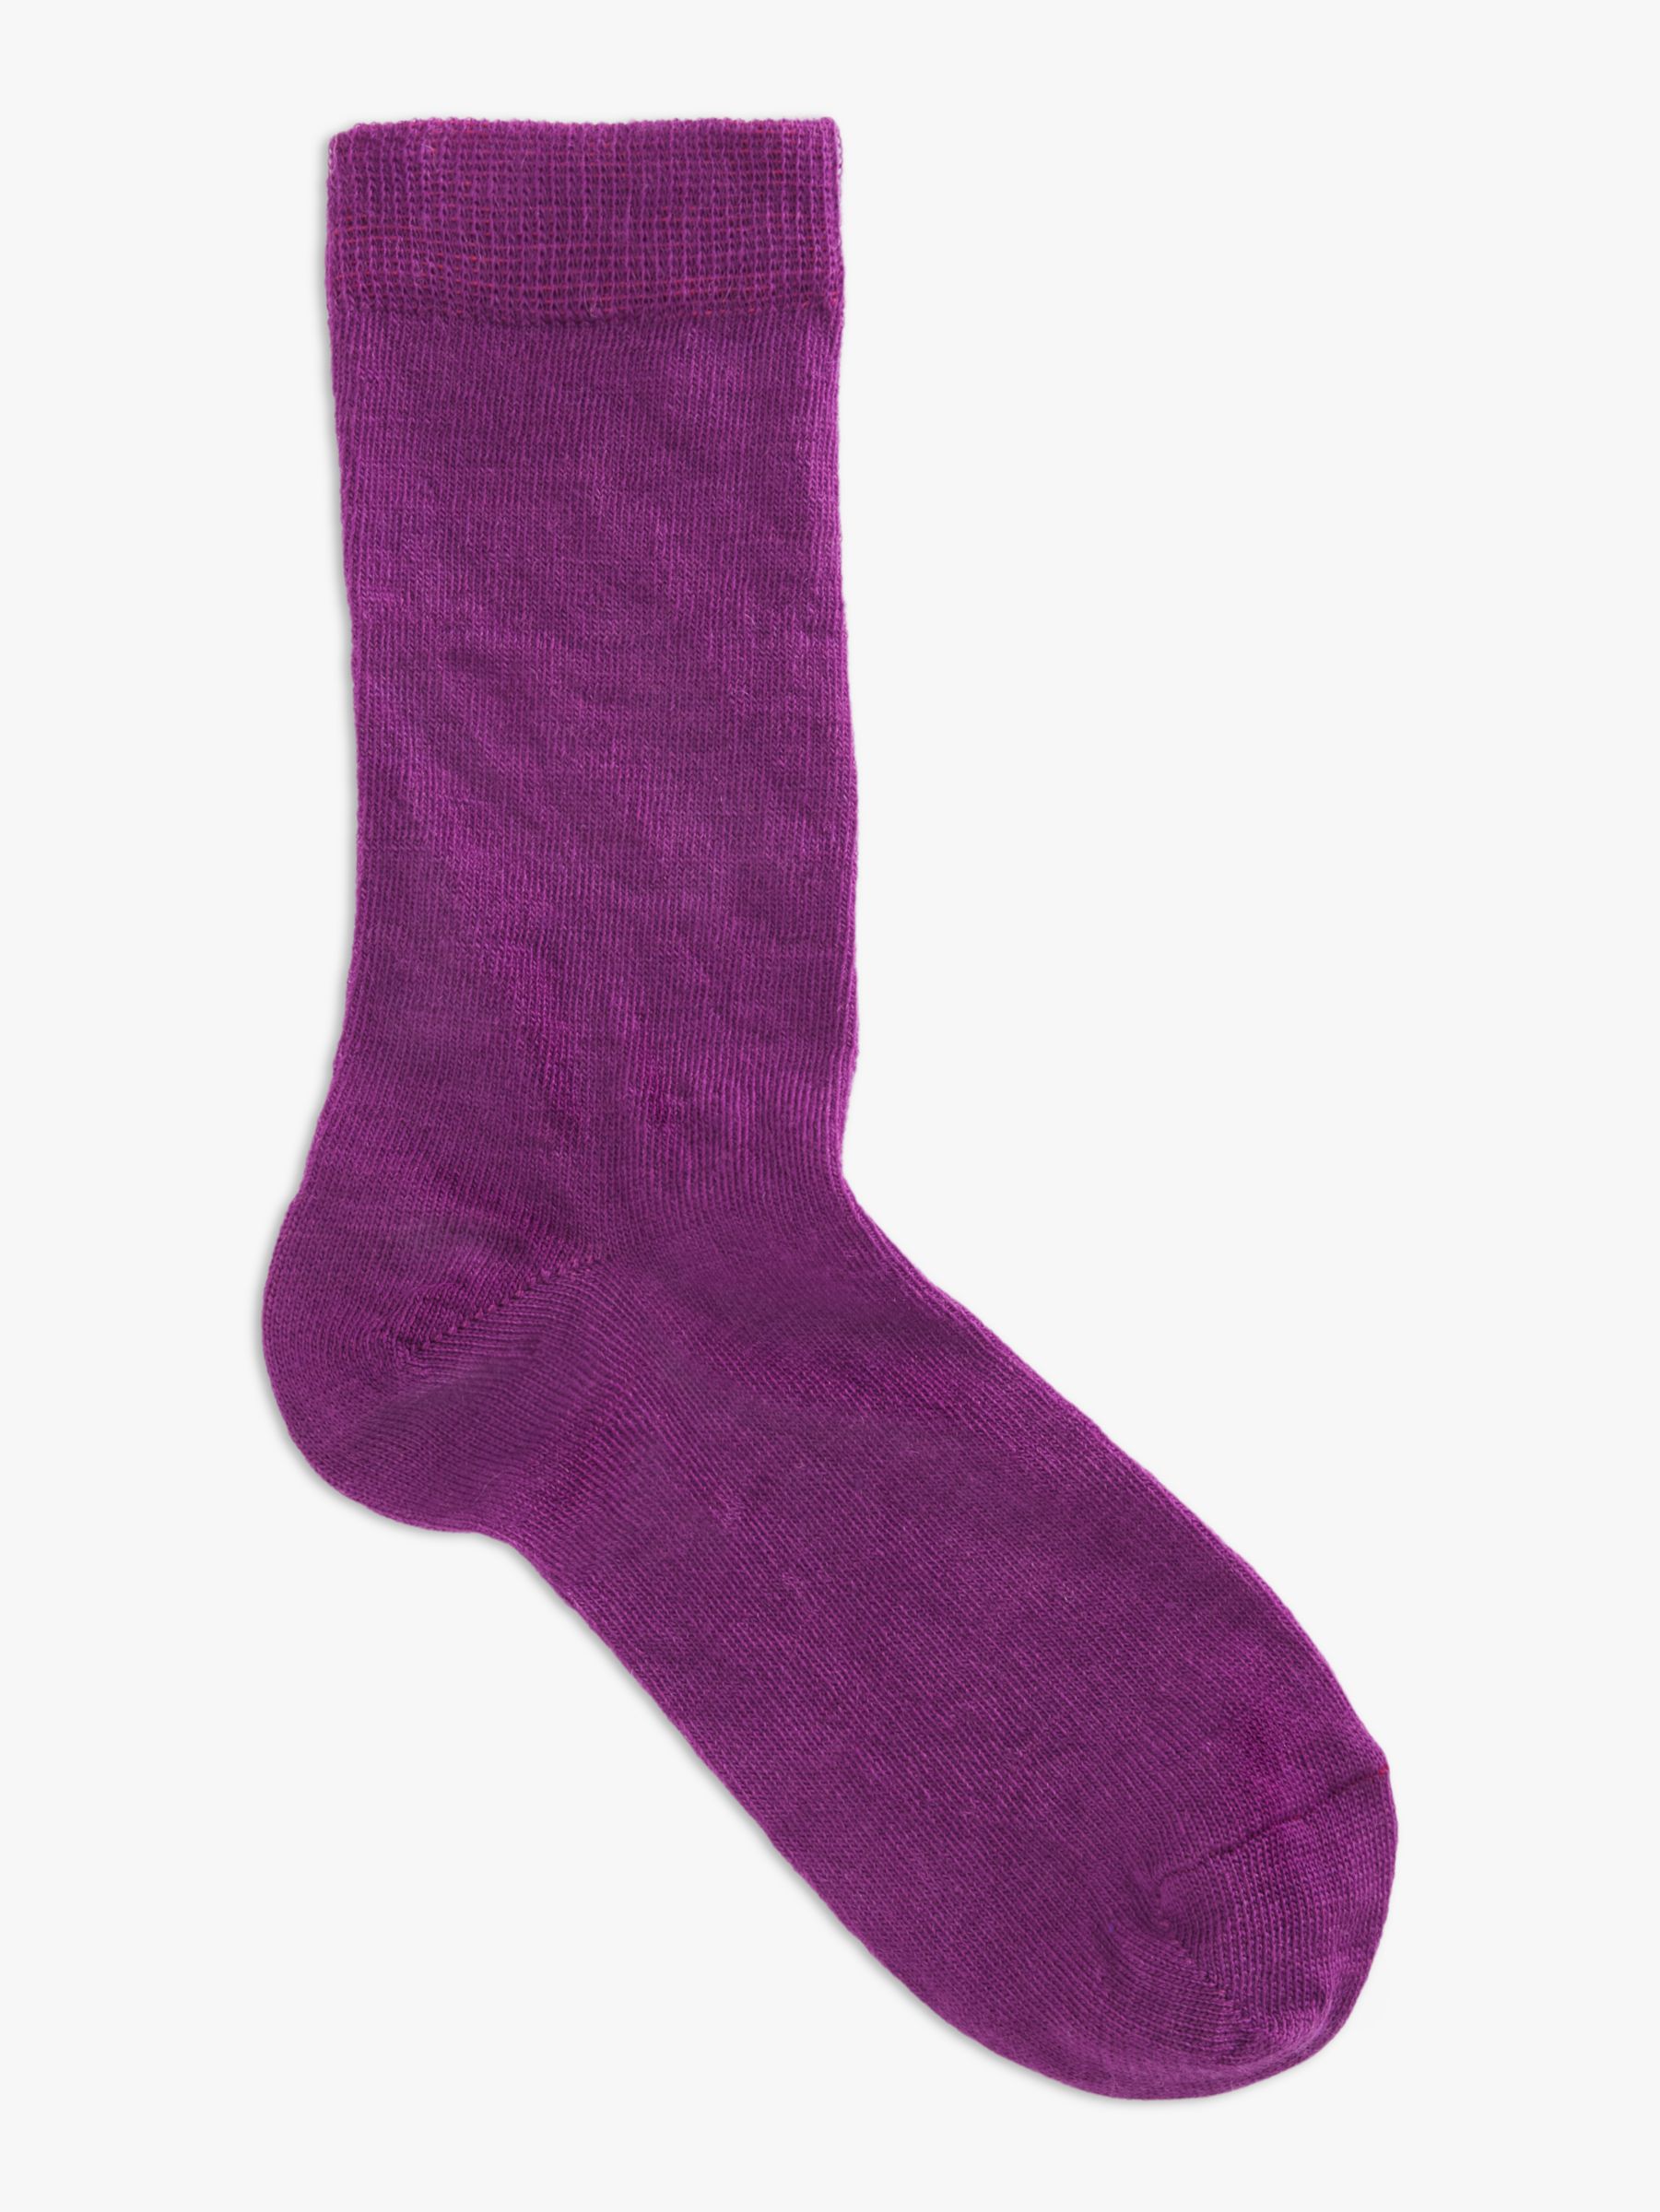 John Lewis Merino Wool Mix Ankle Socks, Pack of 2, Lilac, S-M